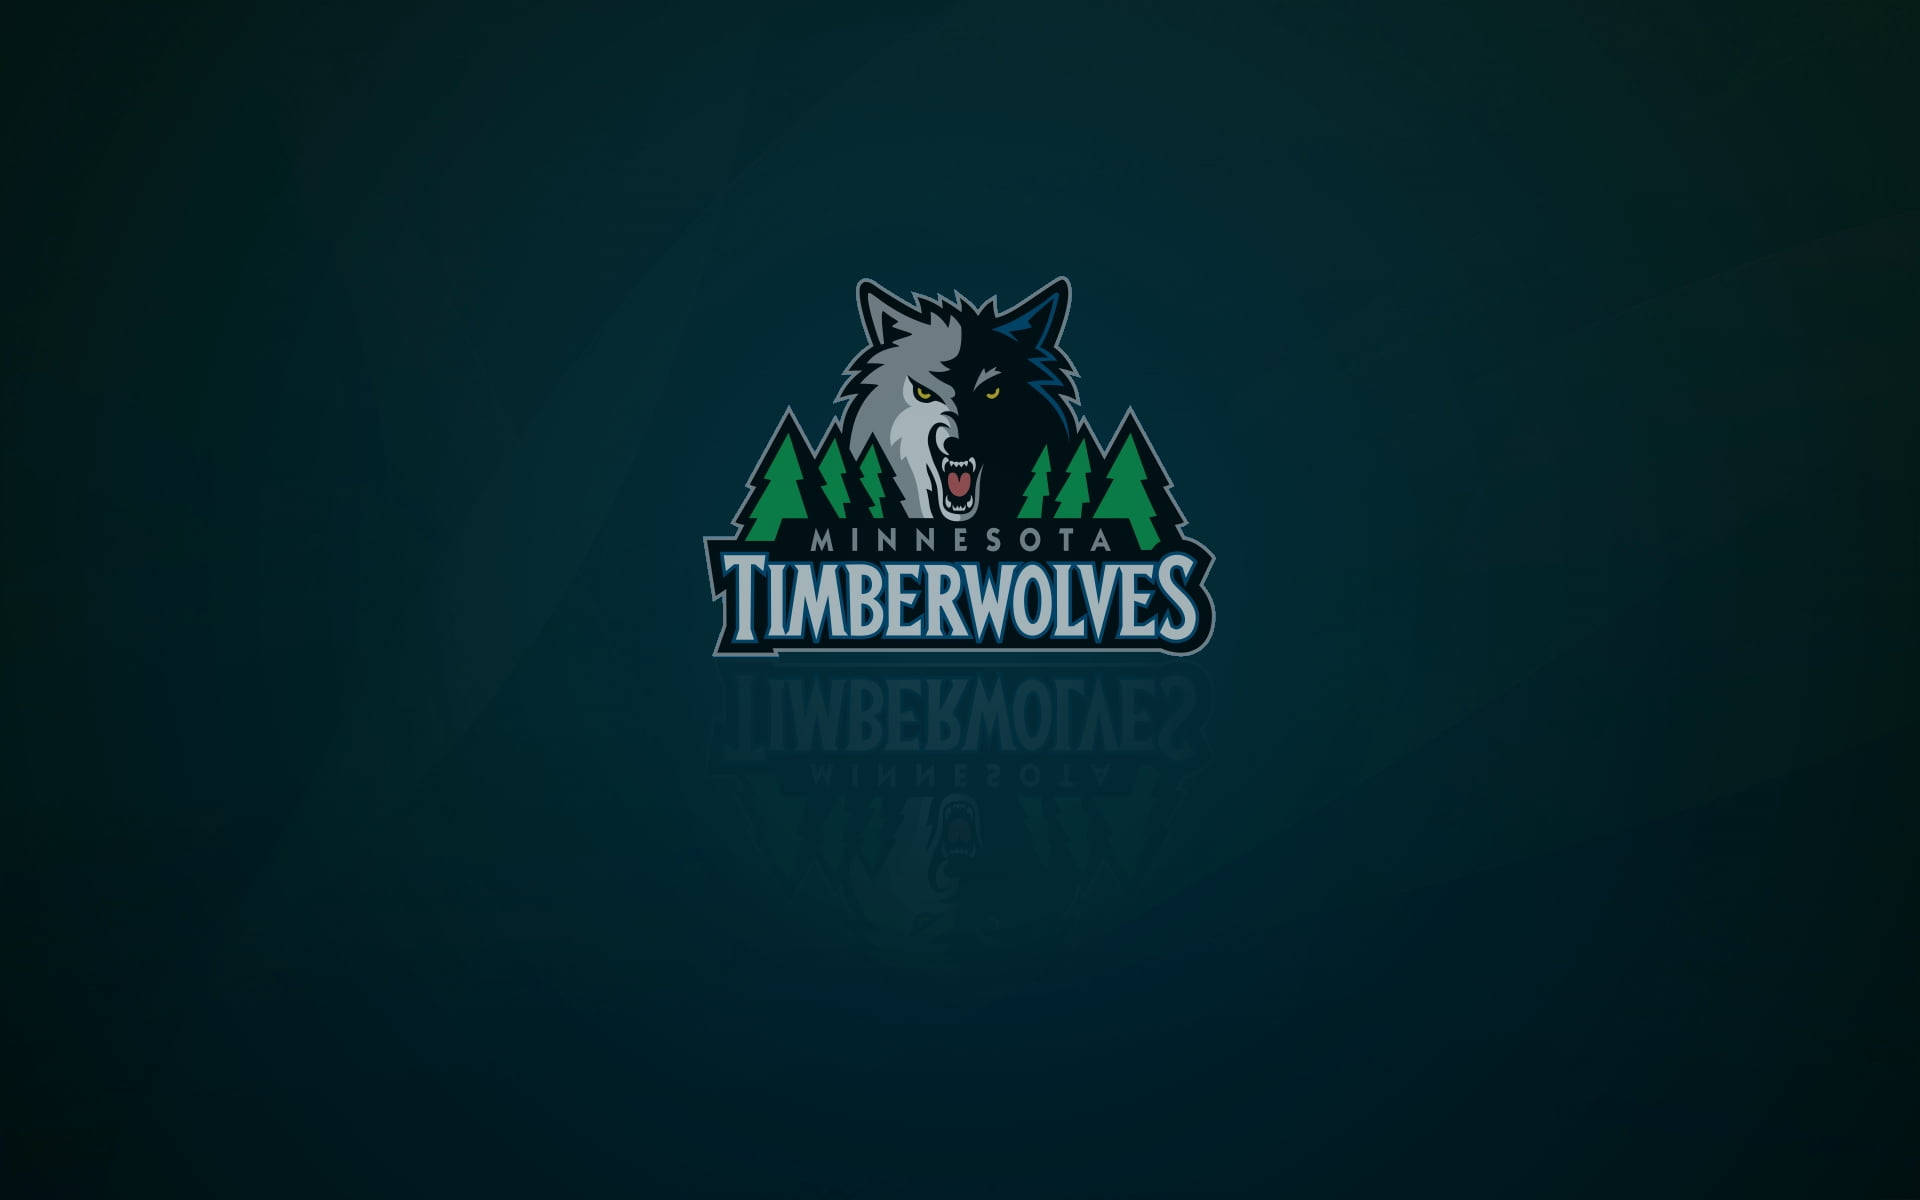 Minnesota Timberwolves Logo In Digital